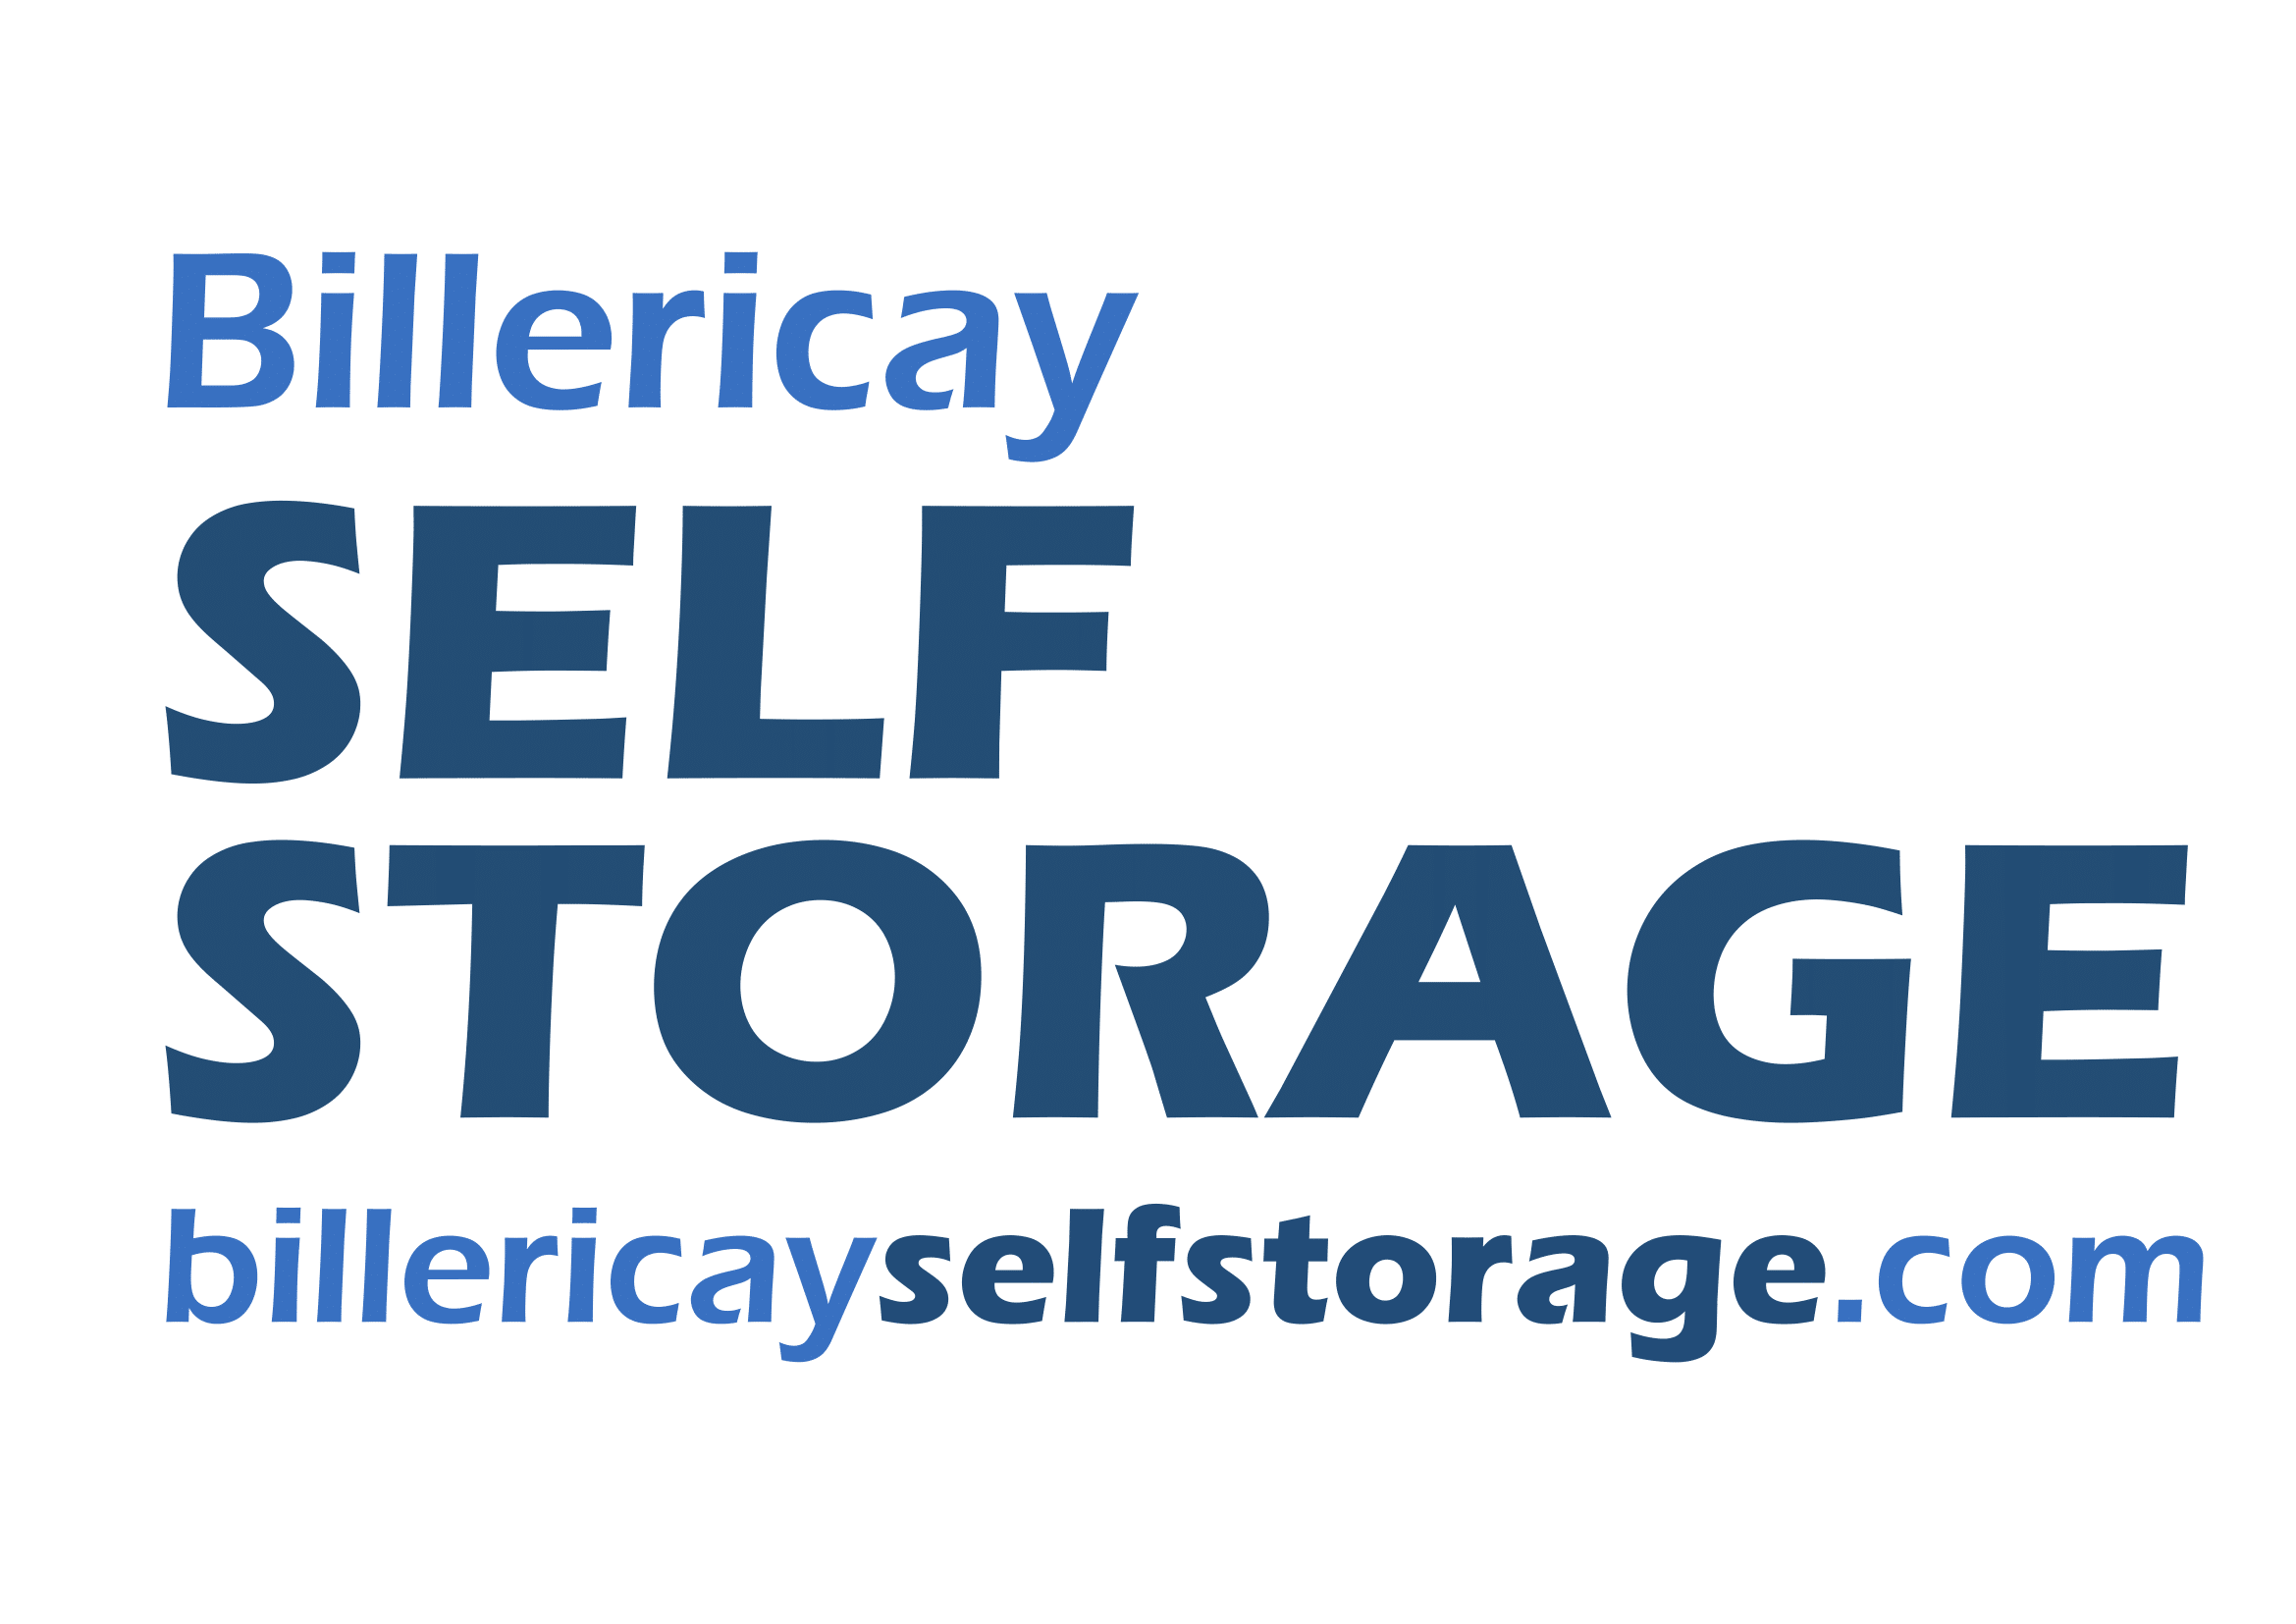 Billericay Self Storage